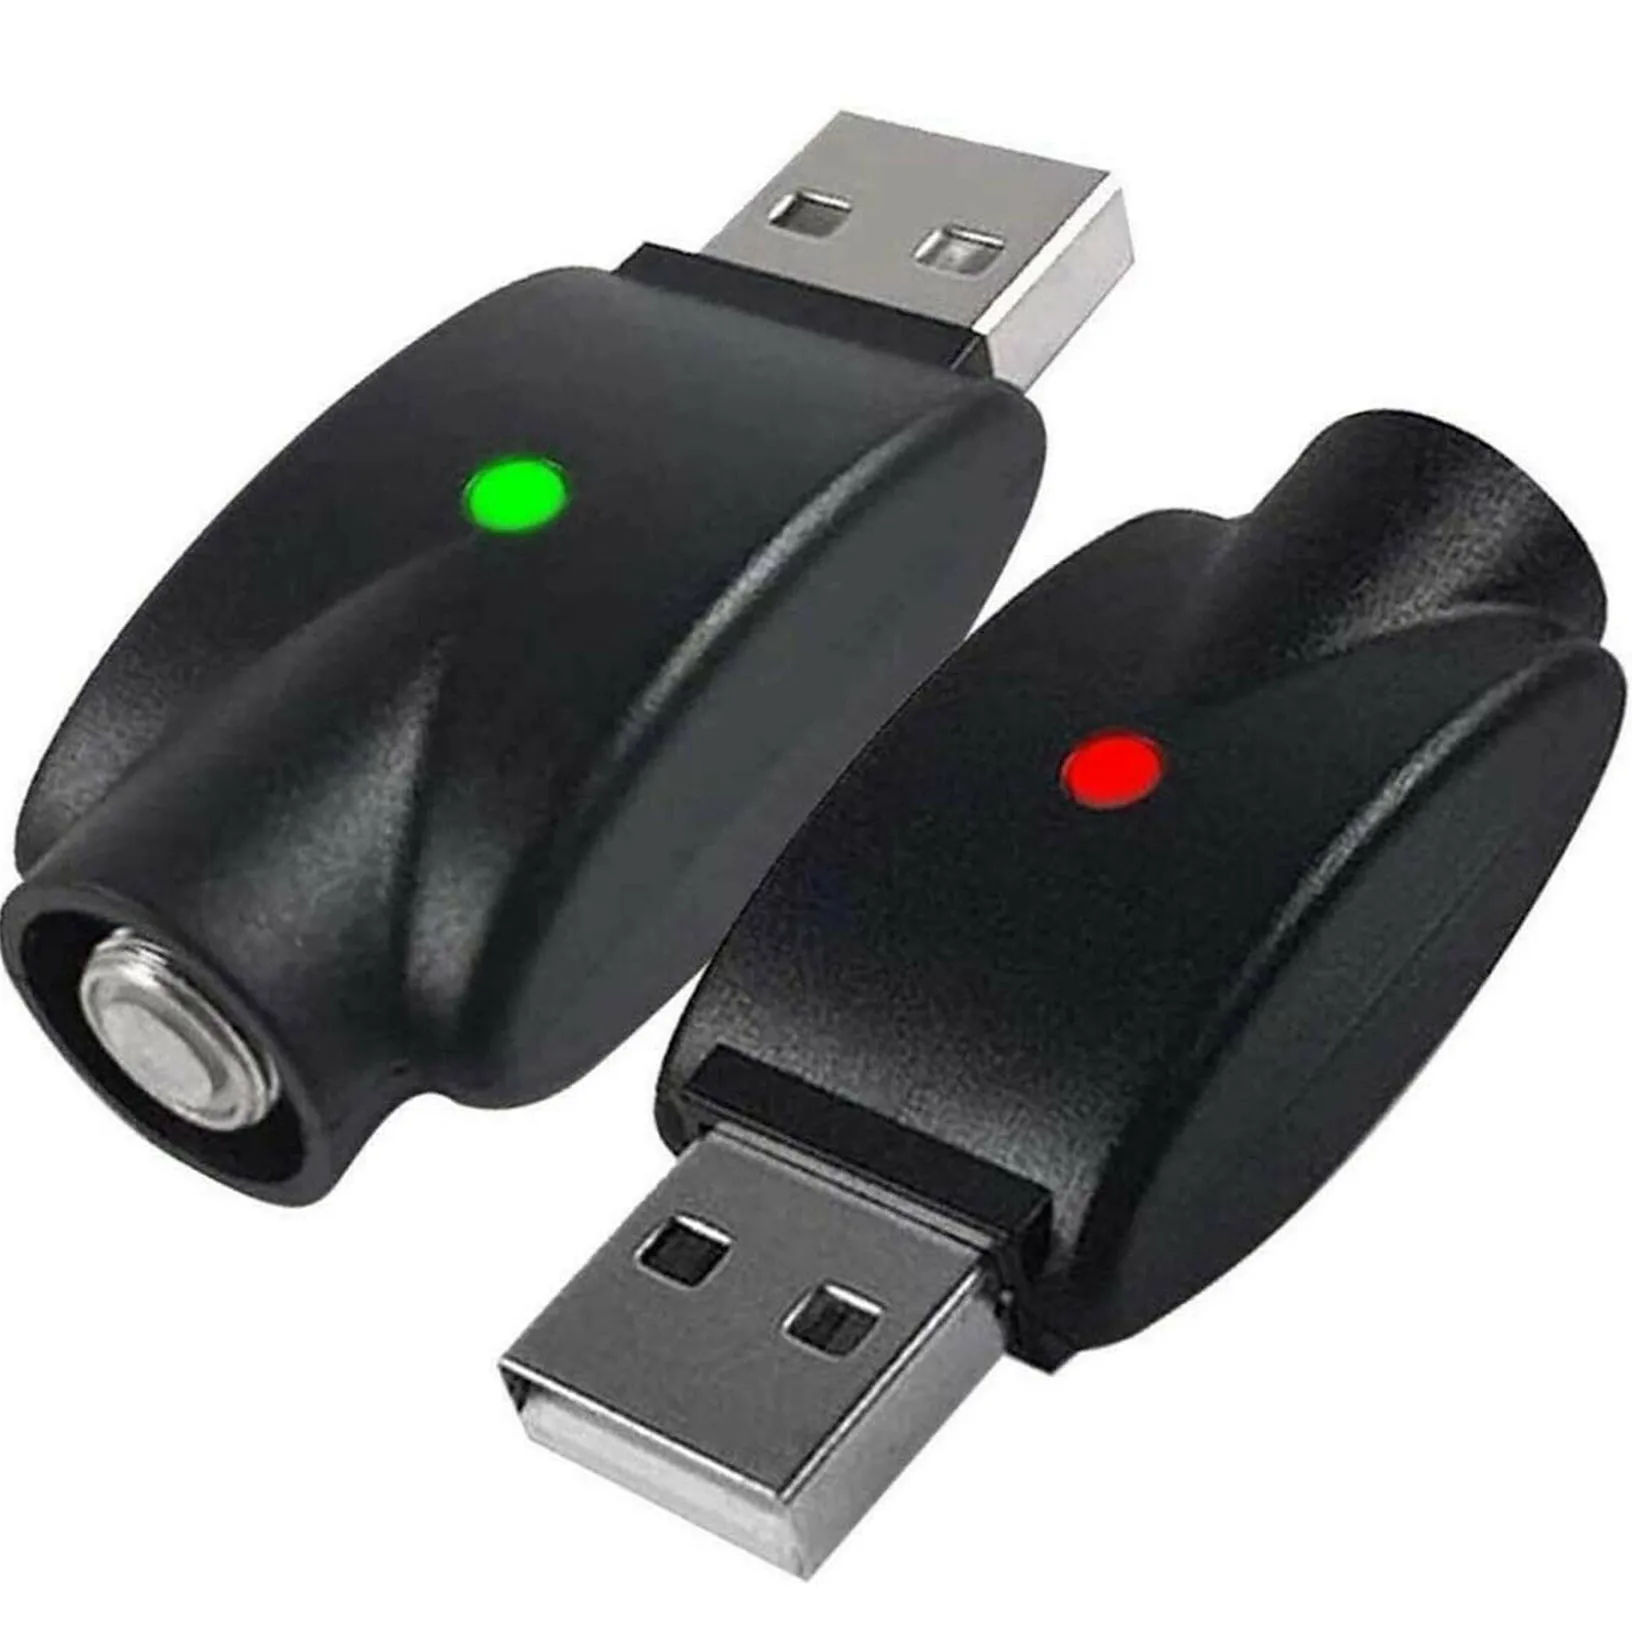 2x Niť Nabíjačku USB Smart Poplatku Preplatok na Ochranu Led Kontrolka